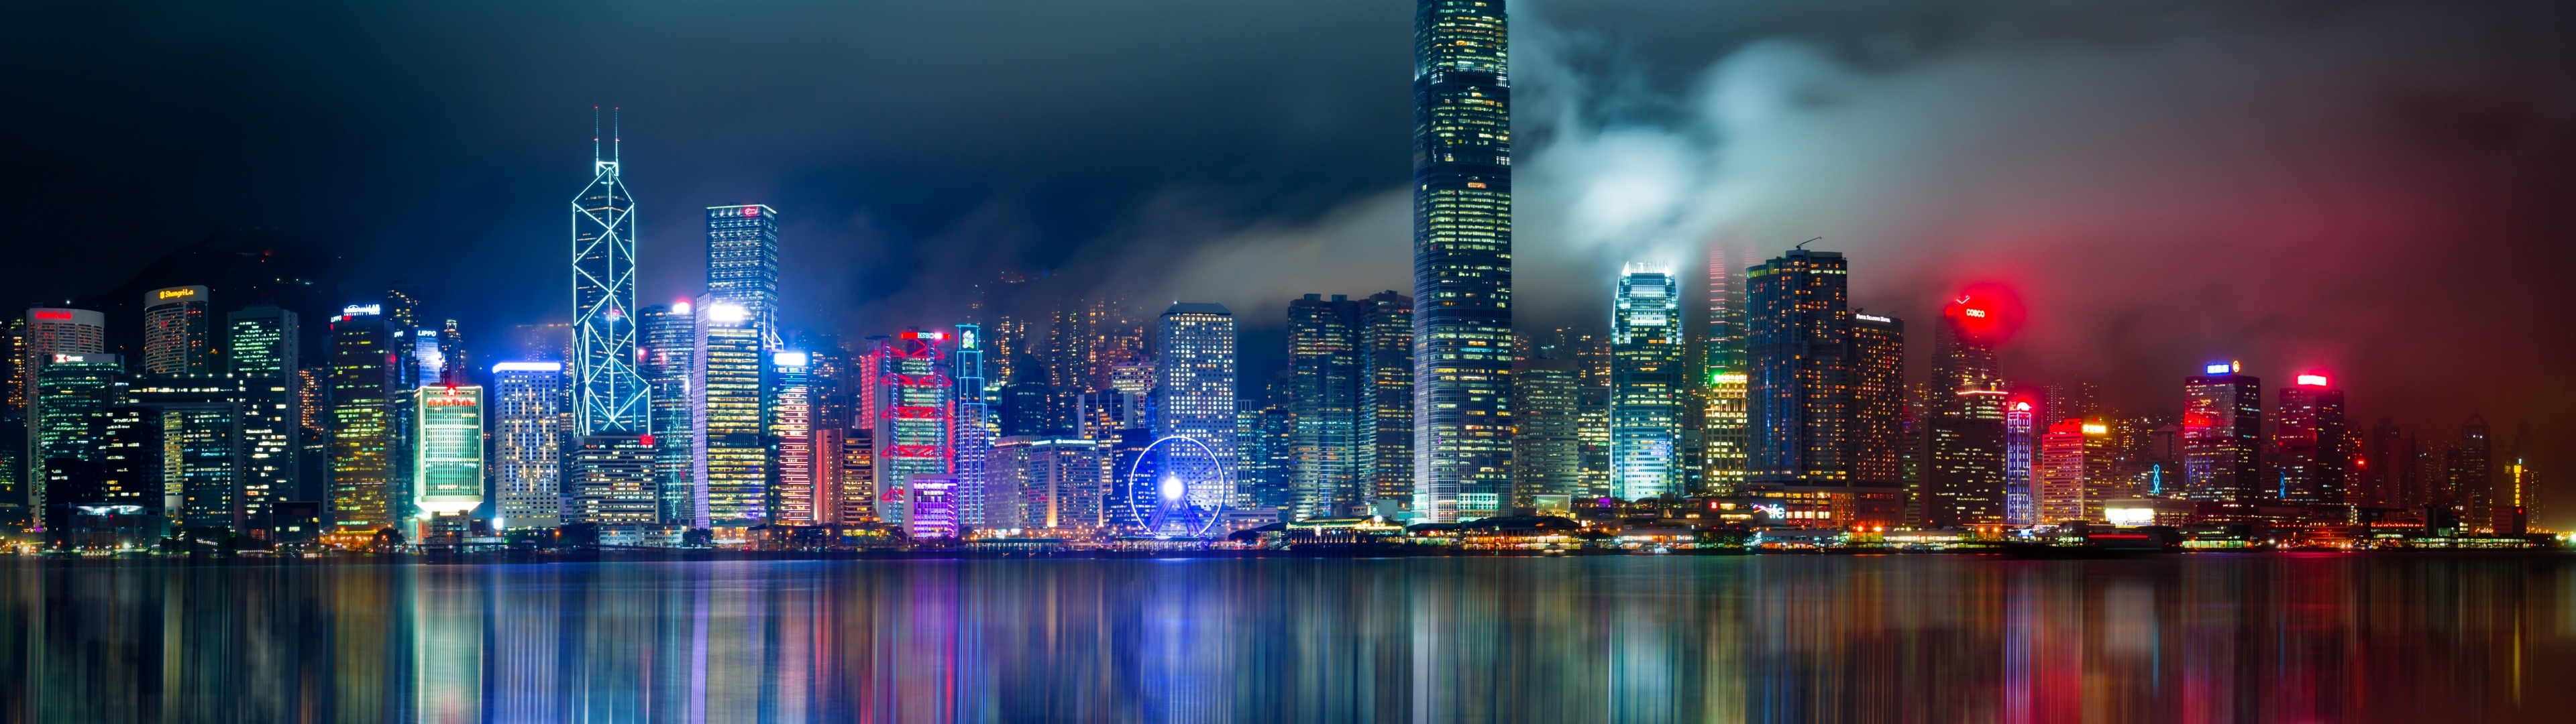 Hong Kong Skyline, City wallpaper, Asian metropolis, Skyscrapers reflection, 3840x1080 Dual Screen Desktop